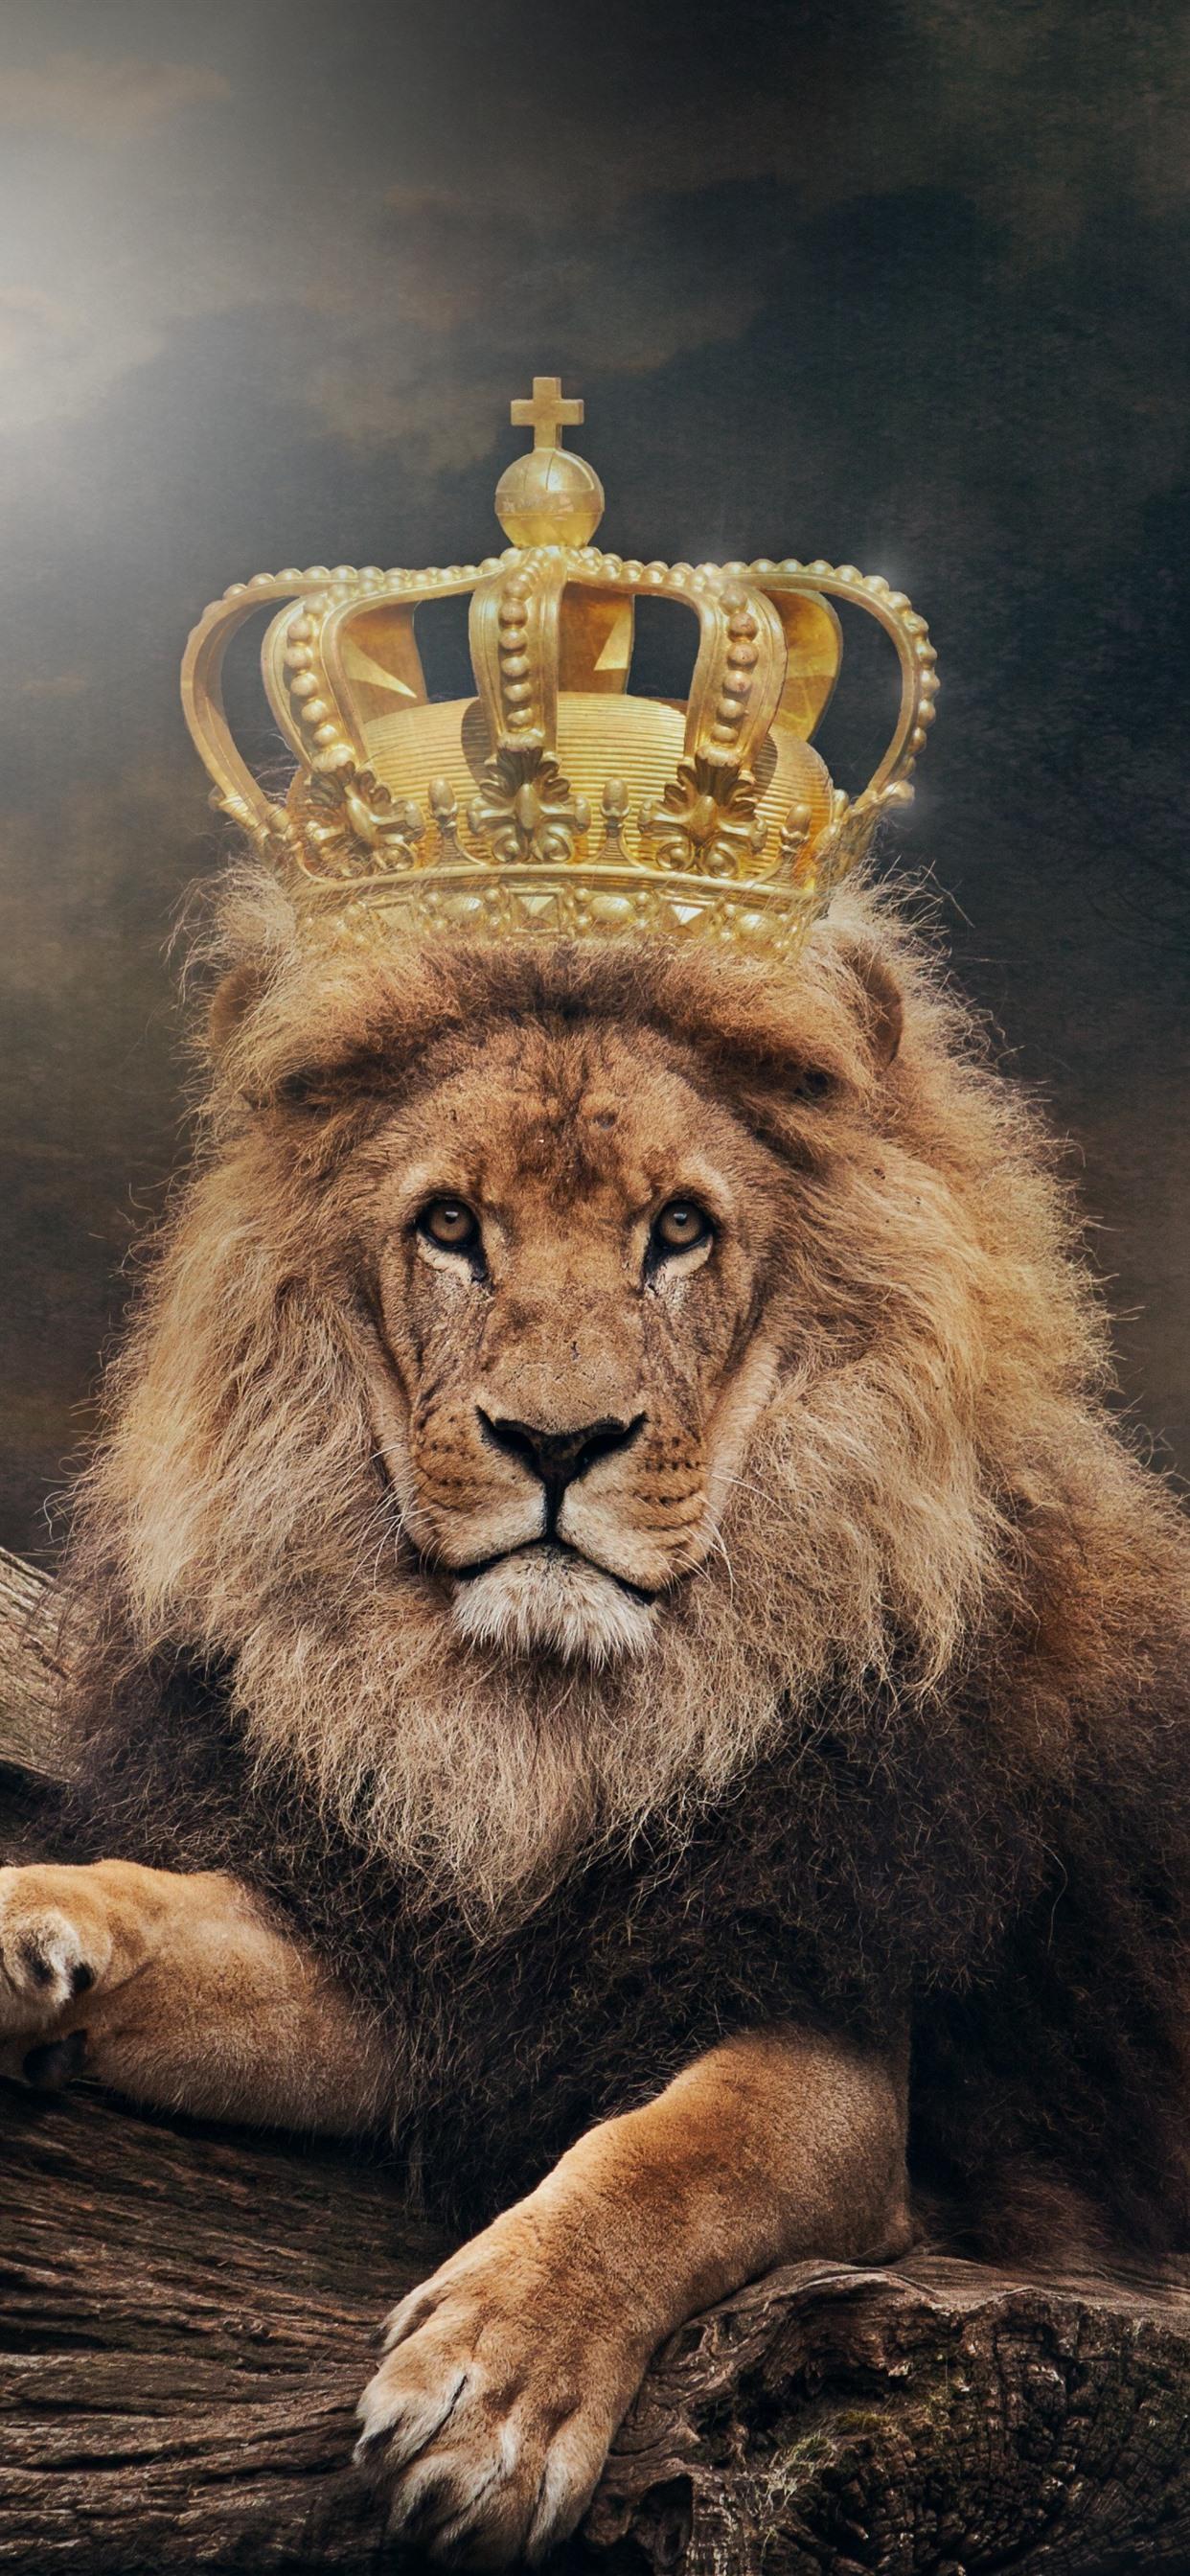 187,884 King Logo Images, Stock Photos & Vectors | Shutterstock